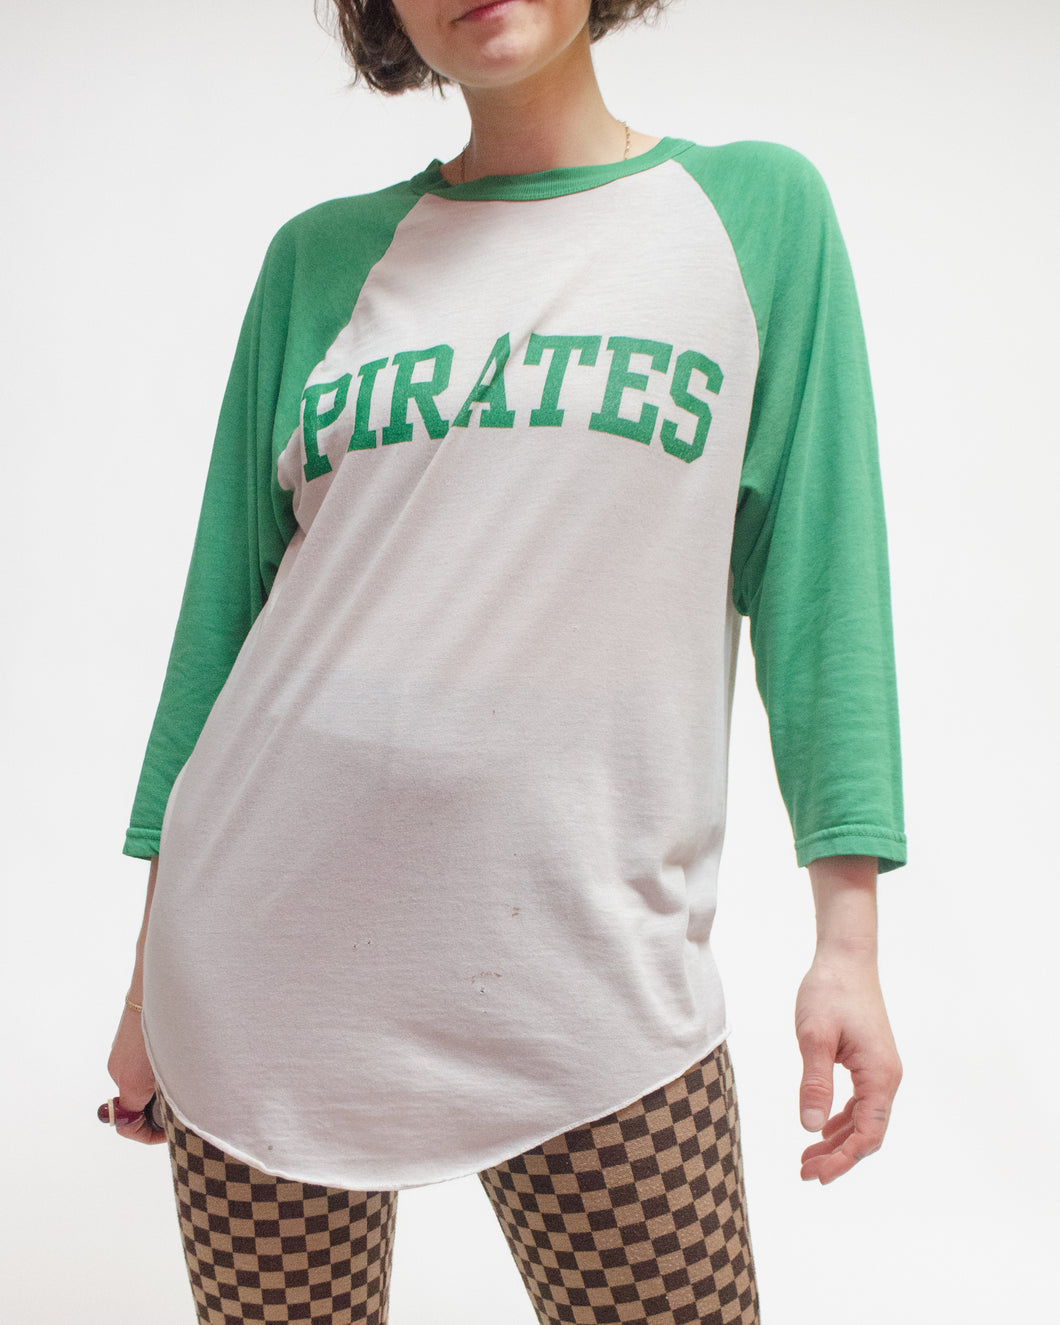 Pirates baseball t-shirt